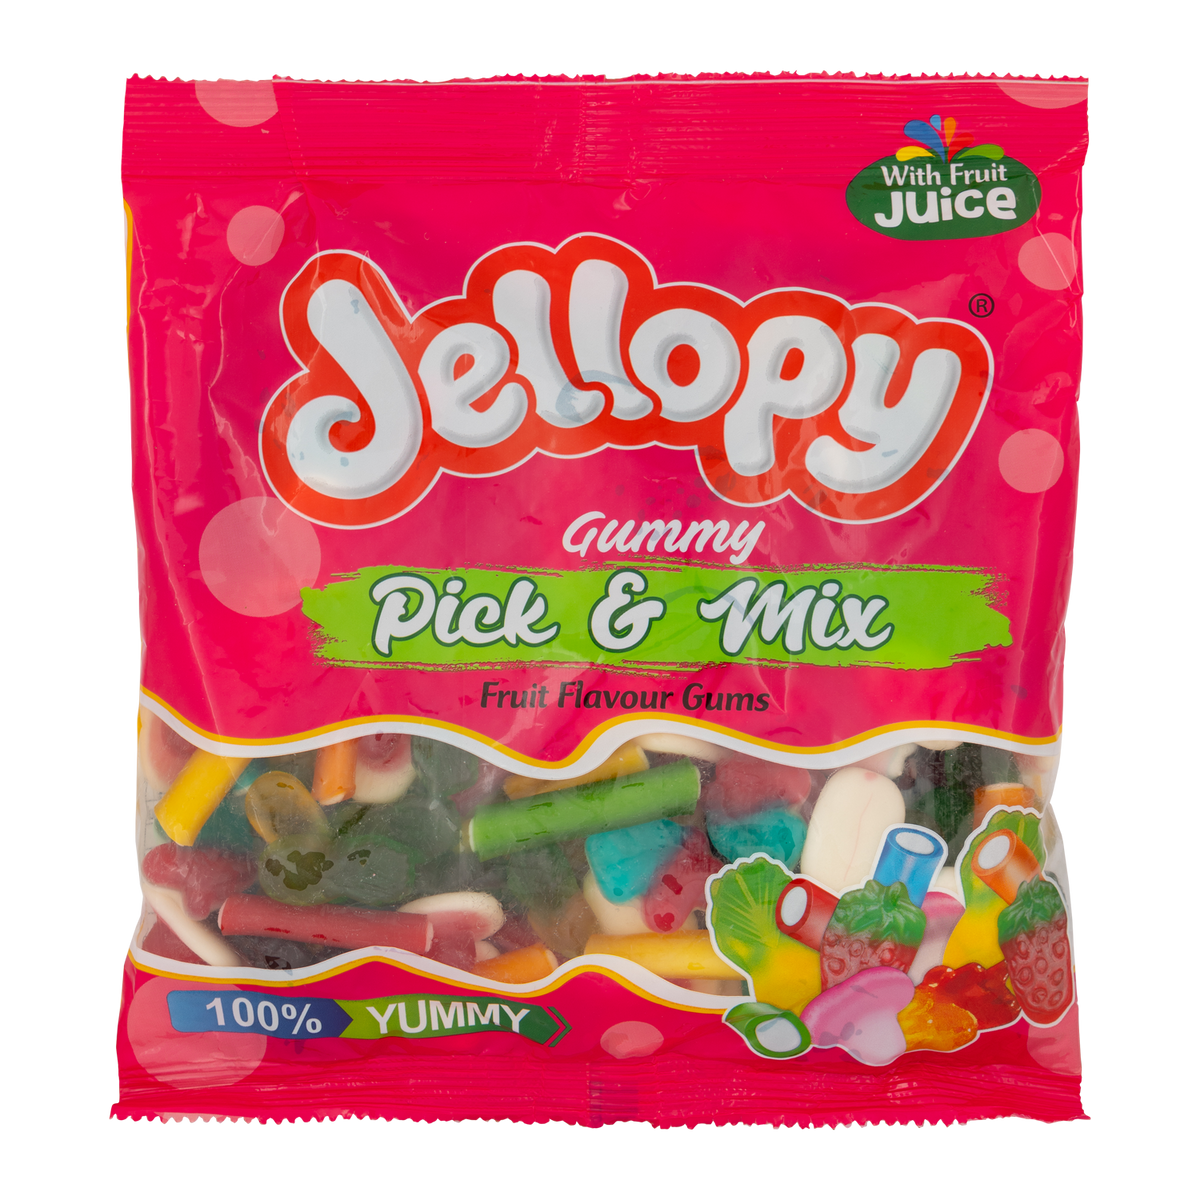 Jellopy Gummy Pick & Mix Fruit Flavour Gums 500g - FabFinds